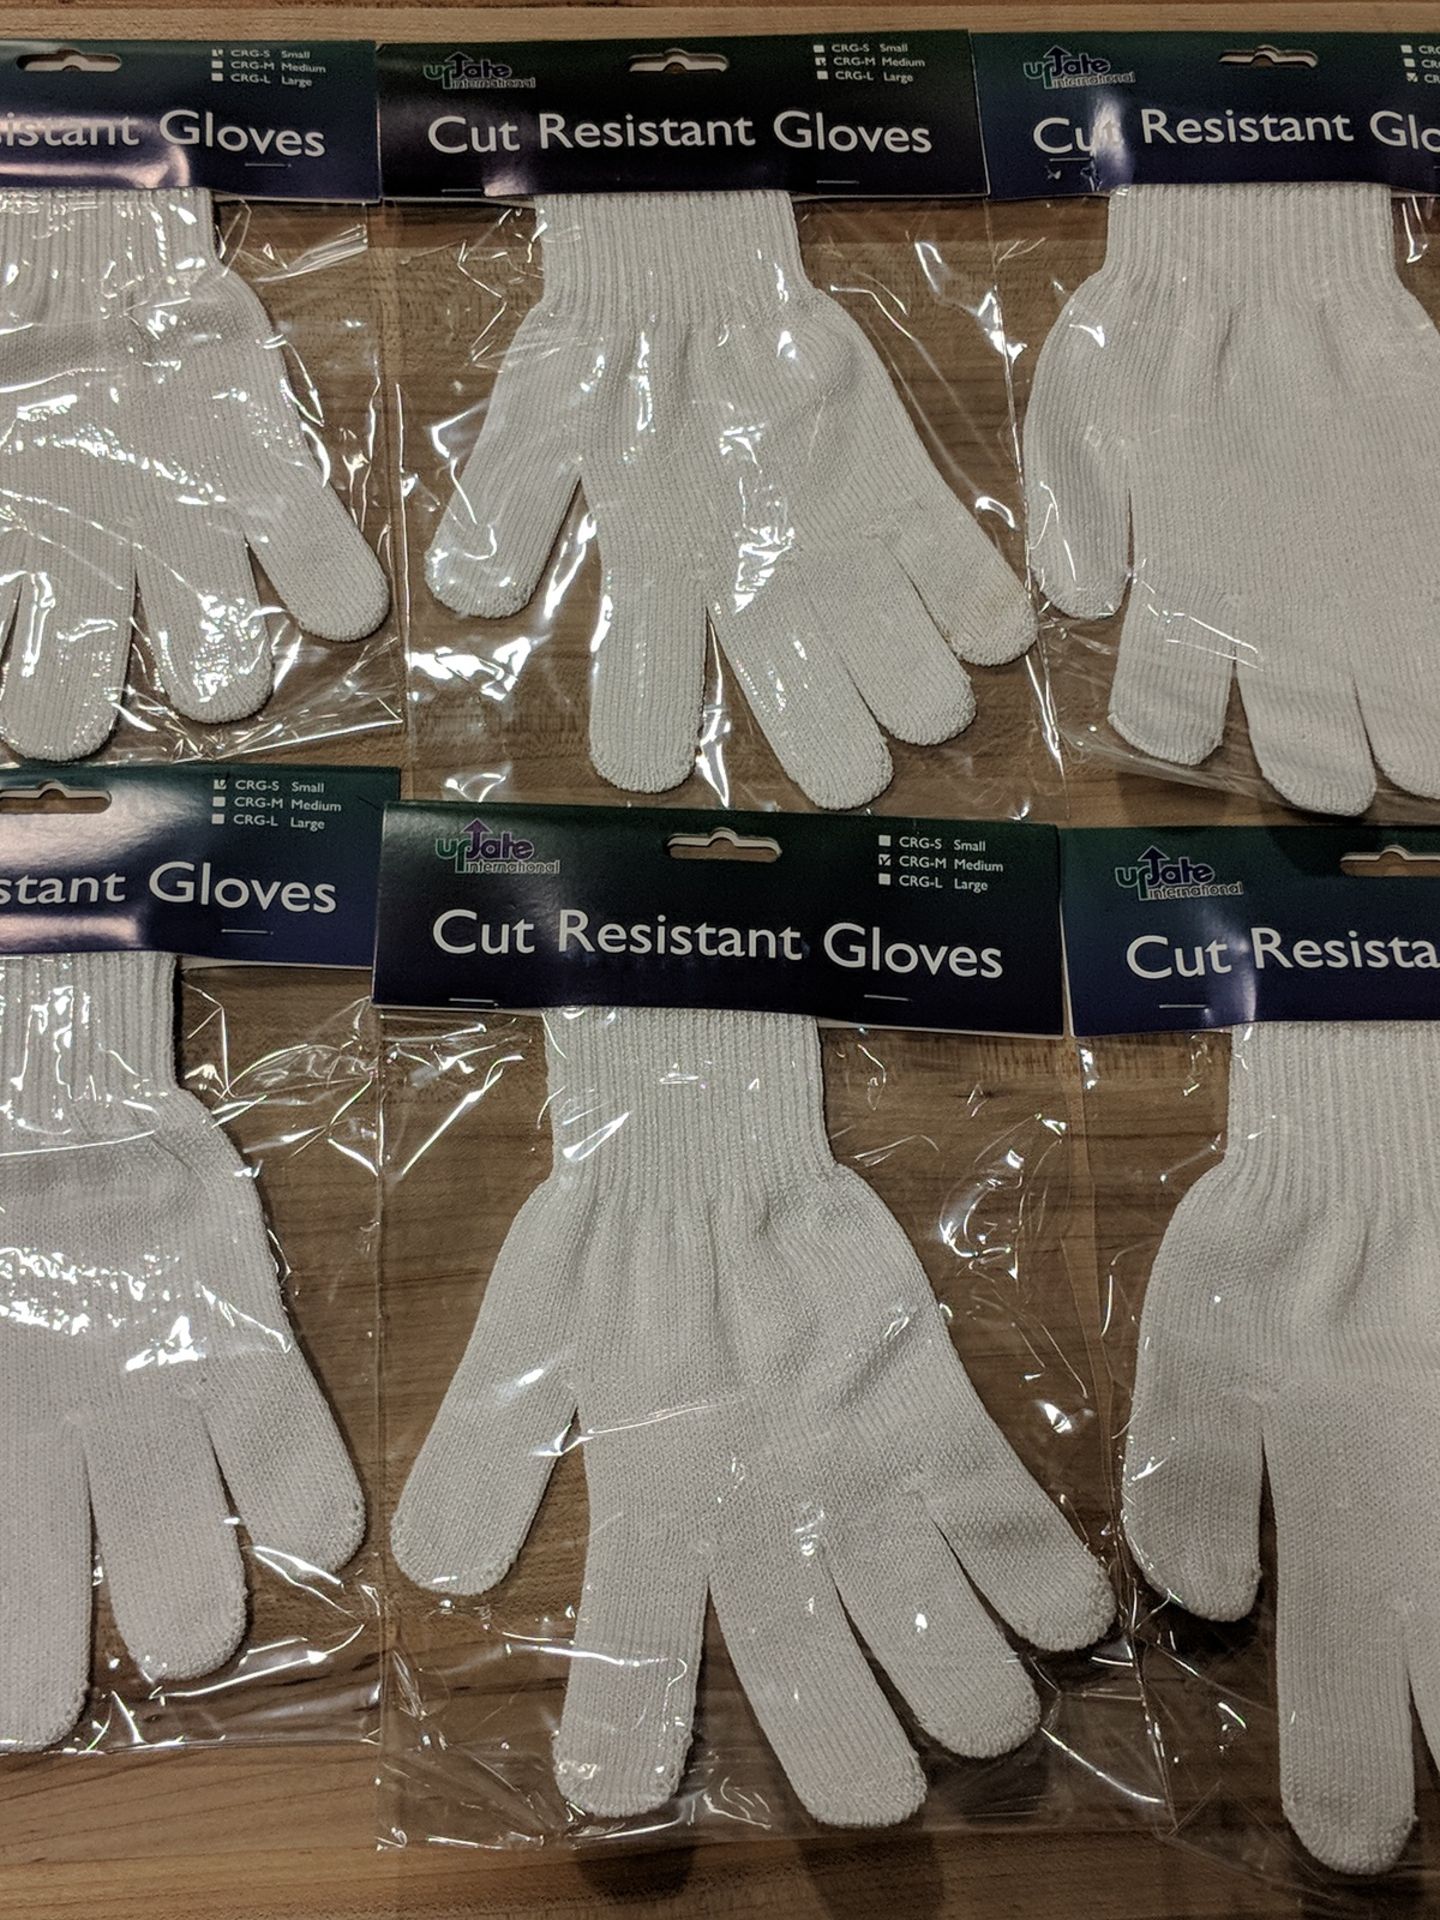 Medium (9.5") Cut-Resistant Gloves - Lot of 2